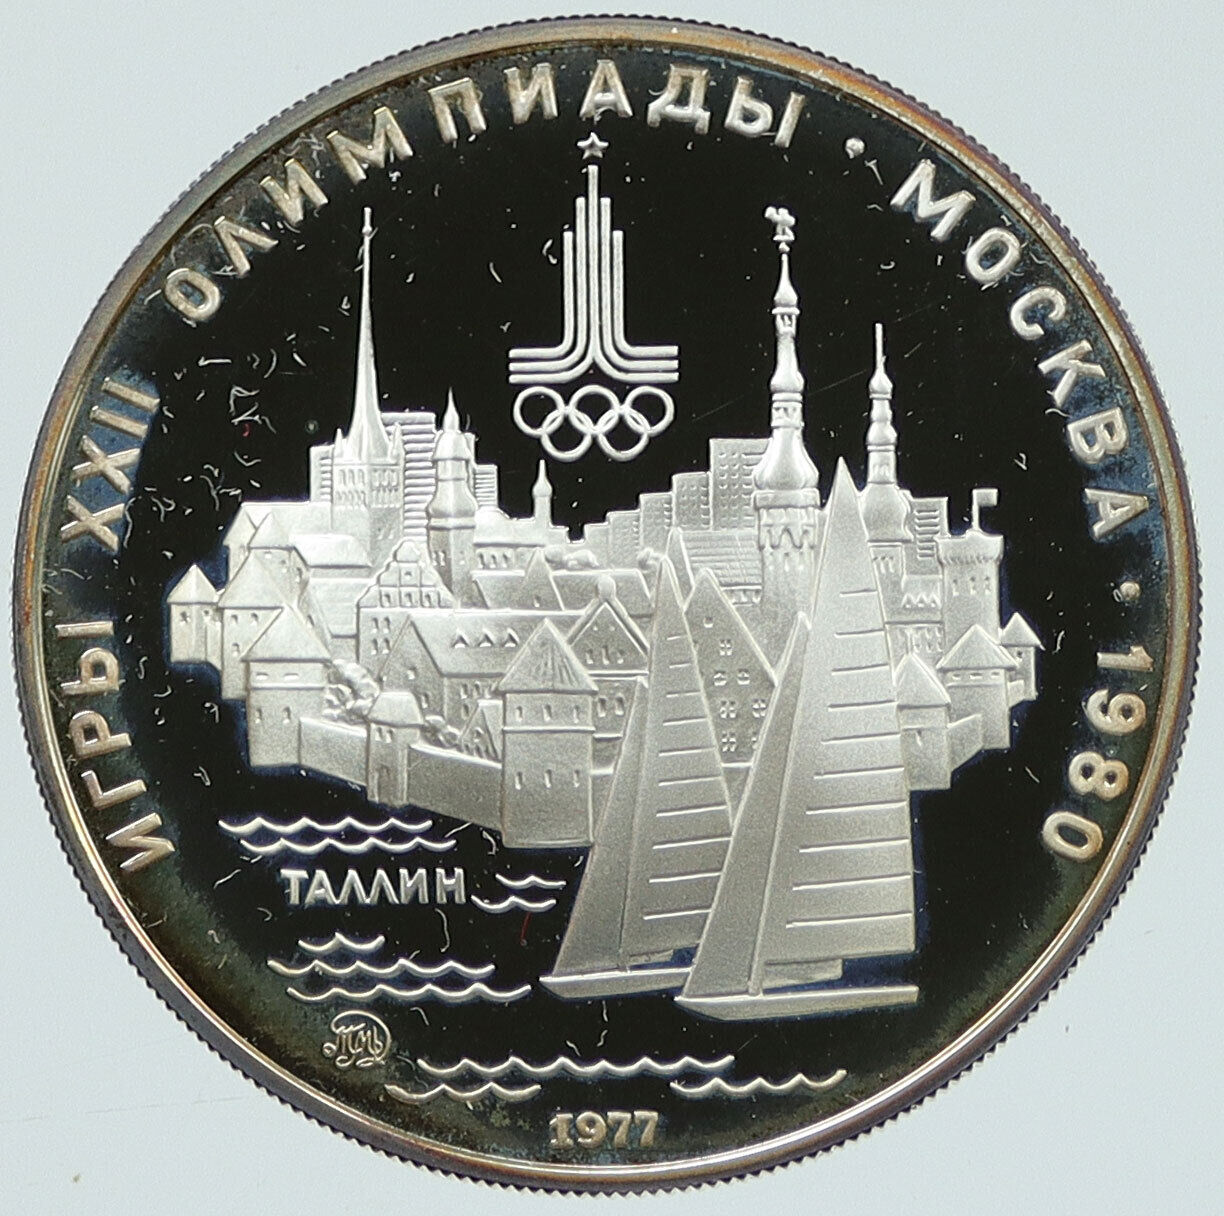 1977 MOSCOW 1980 Russia Olympics Sailing TALLINN PROOF Silver 5 Ru Coin i116735